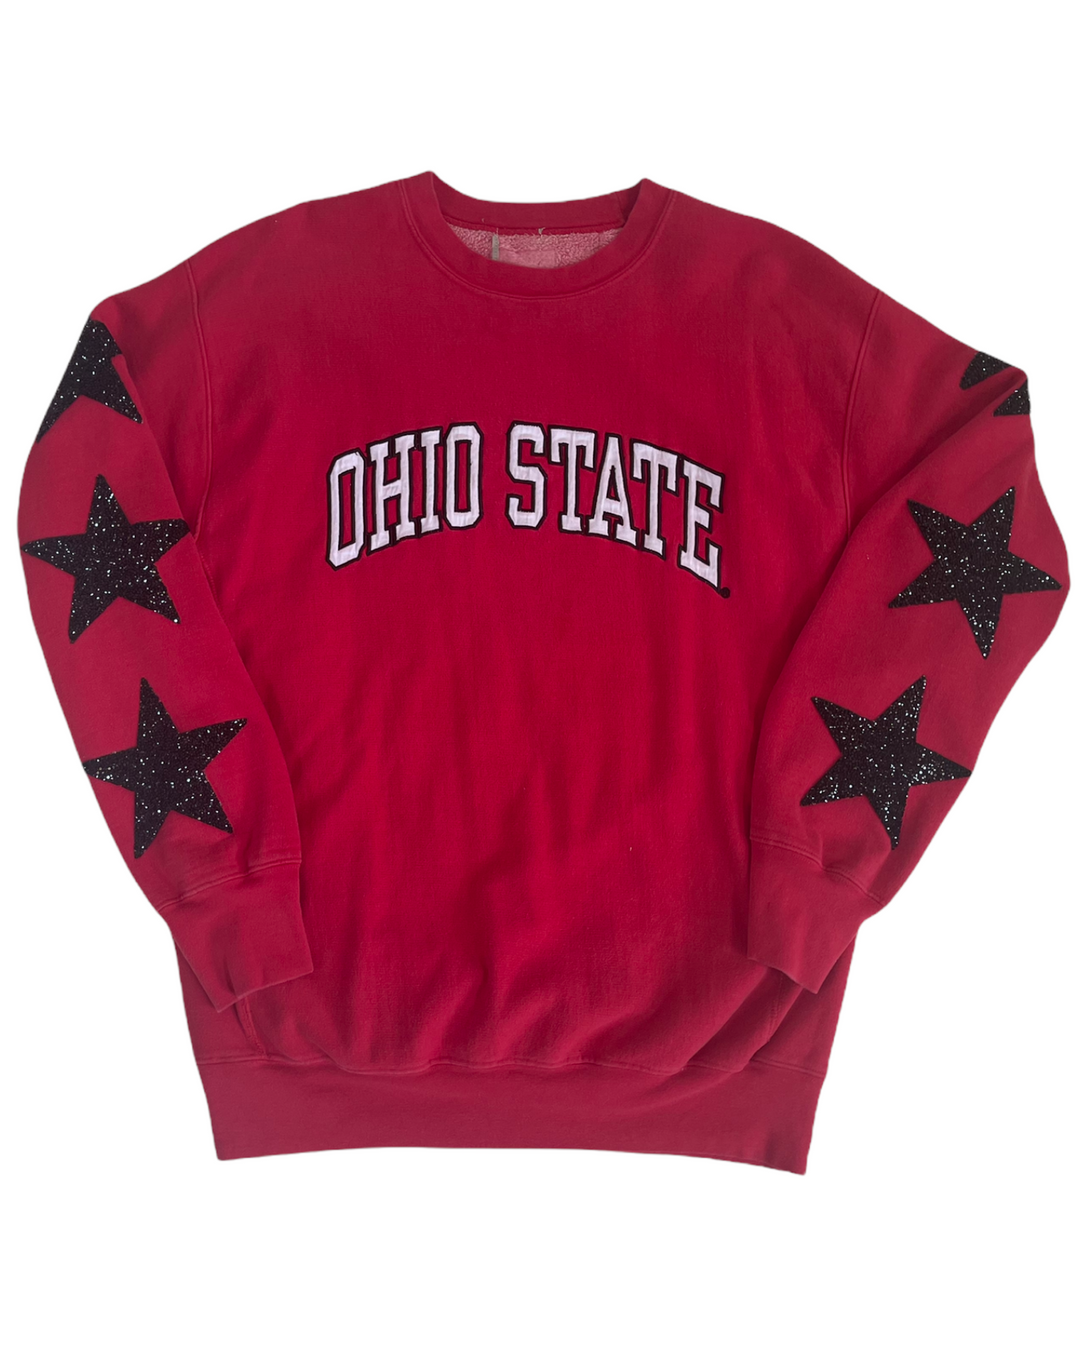 Ohio State Vintage Star Patch Sweatshirt